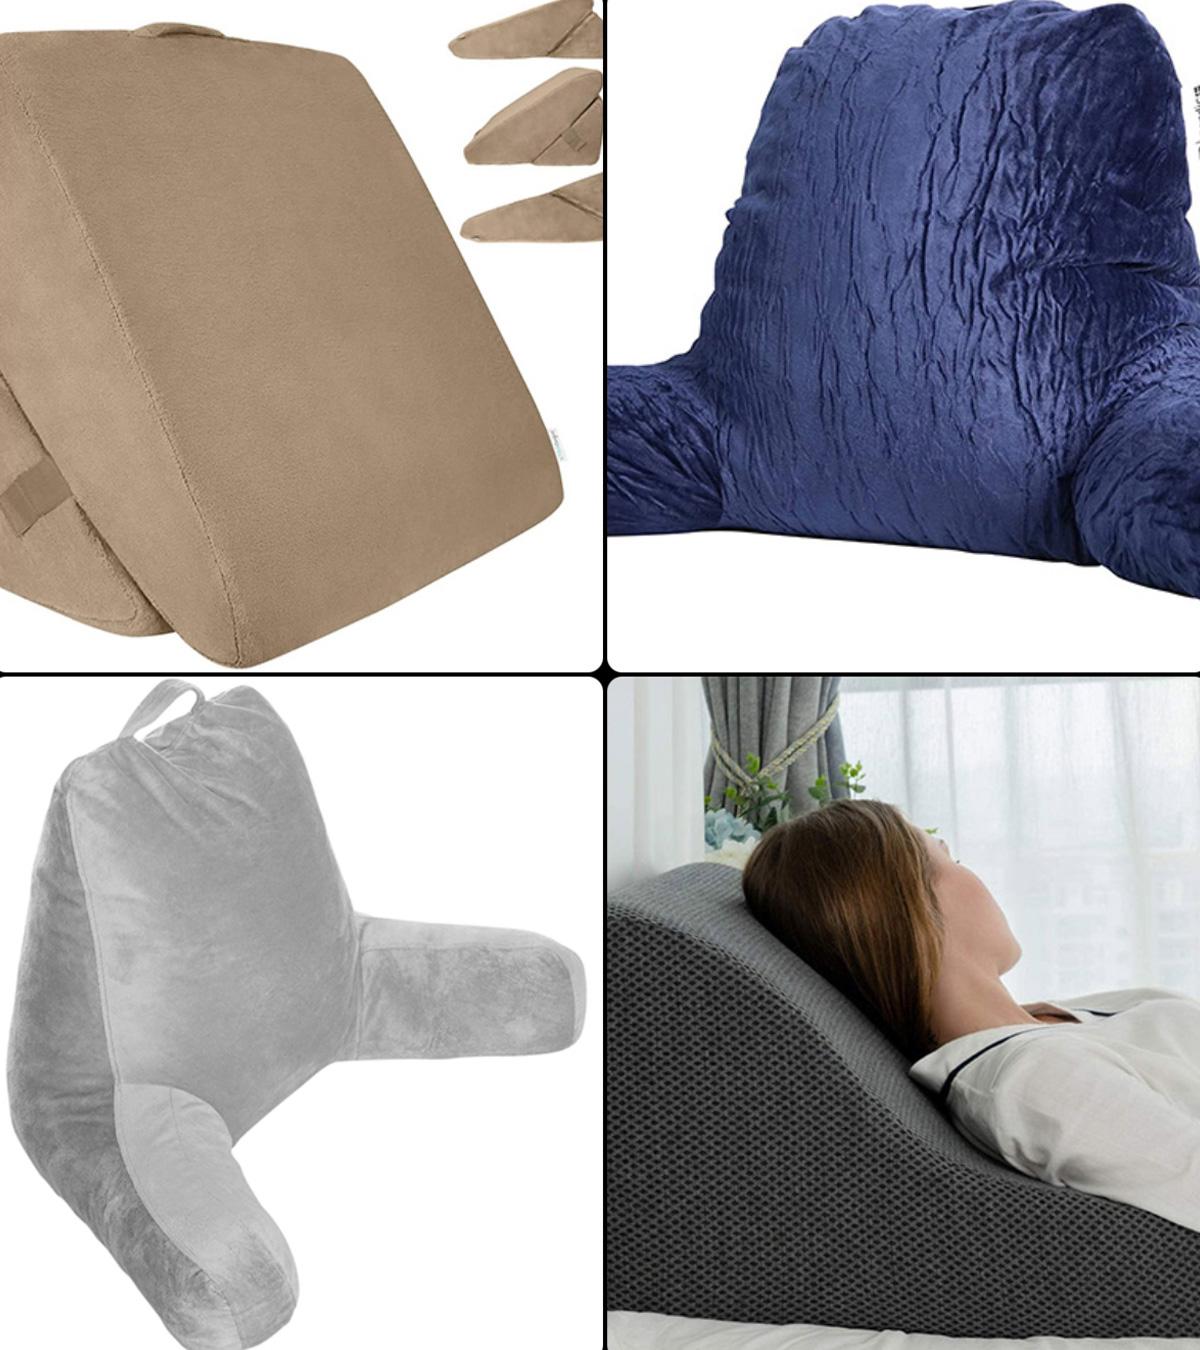 https://www.momjunction.com/wp-content/uploads/2020/11/Best-Sit-Up-Pillows-To-Buy1.jpg